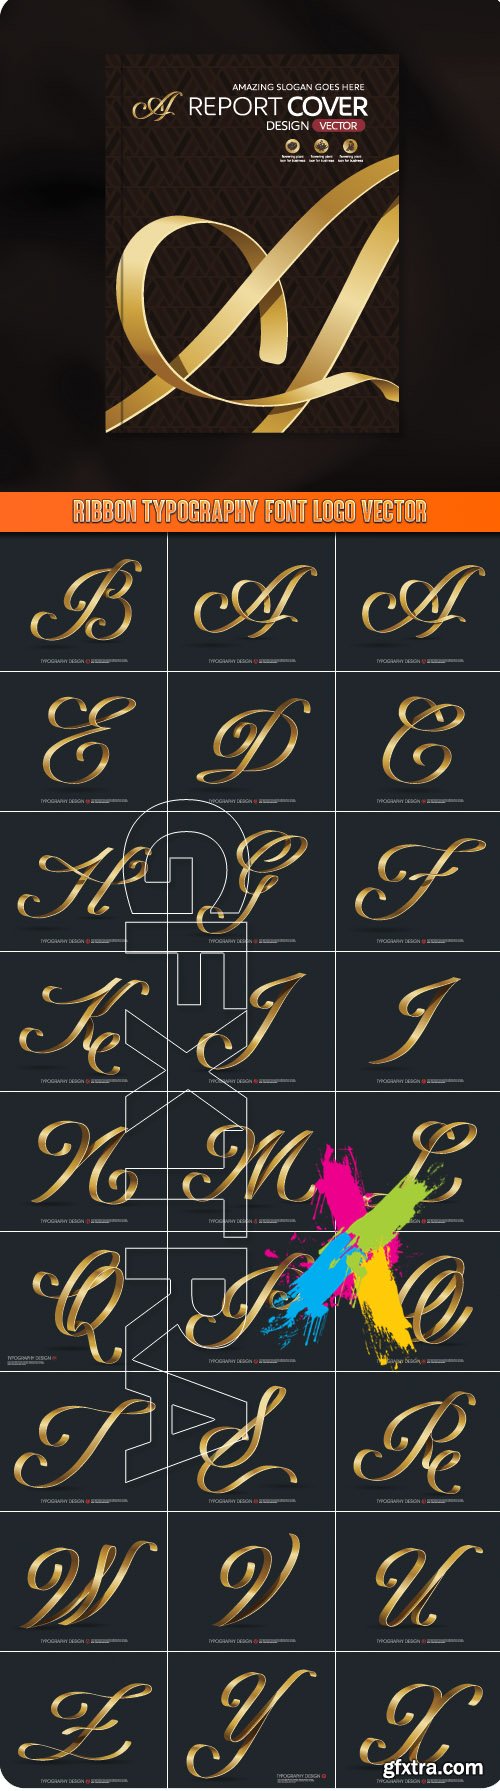 Ribbon typography font logo vector